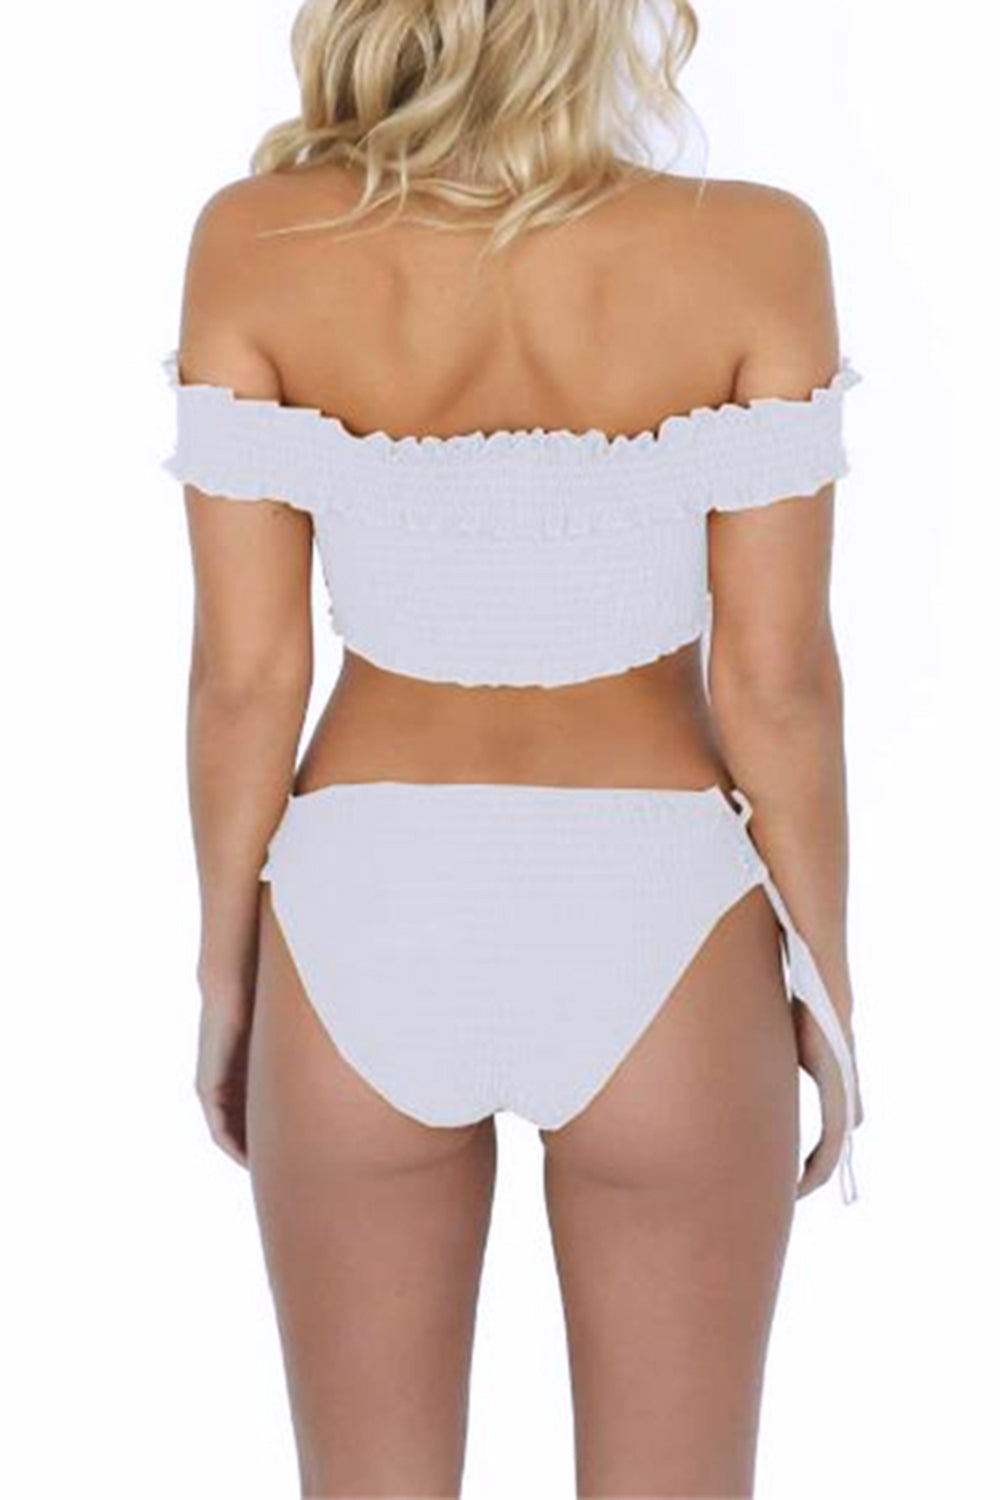 Iyasson Solid Color Textured Fabric Cross Design Bikini Sets